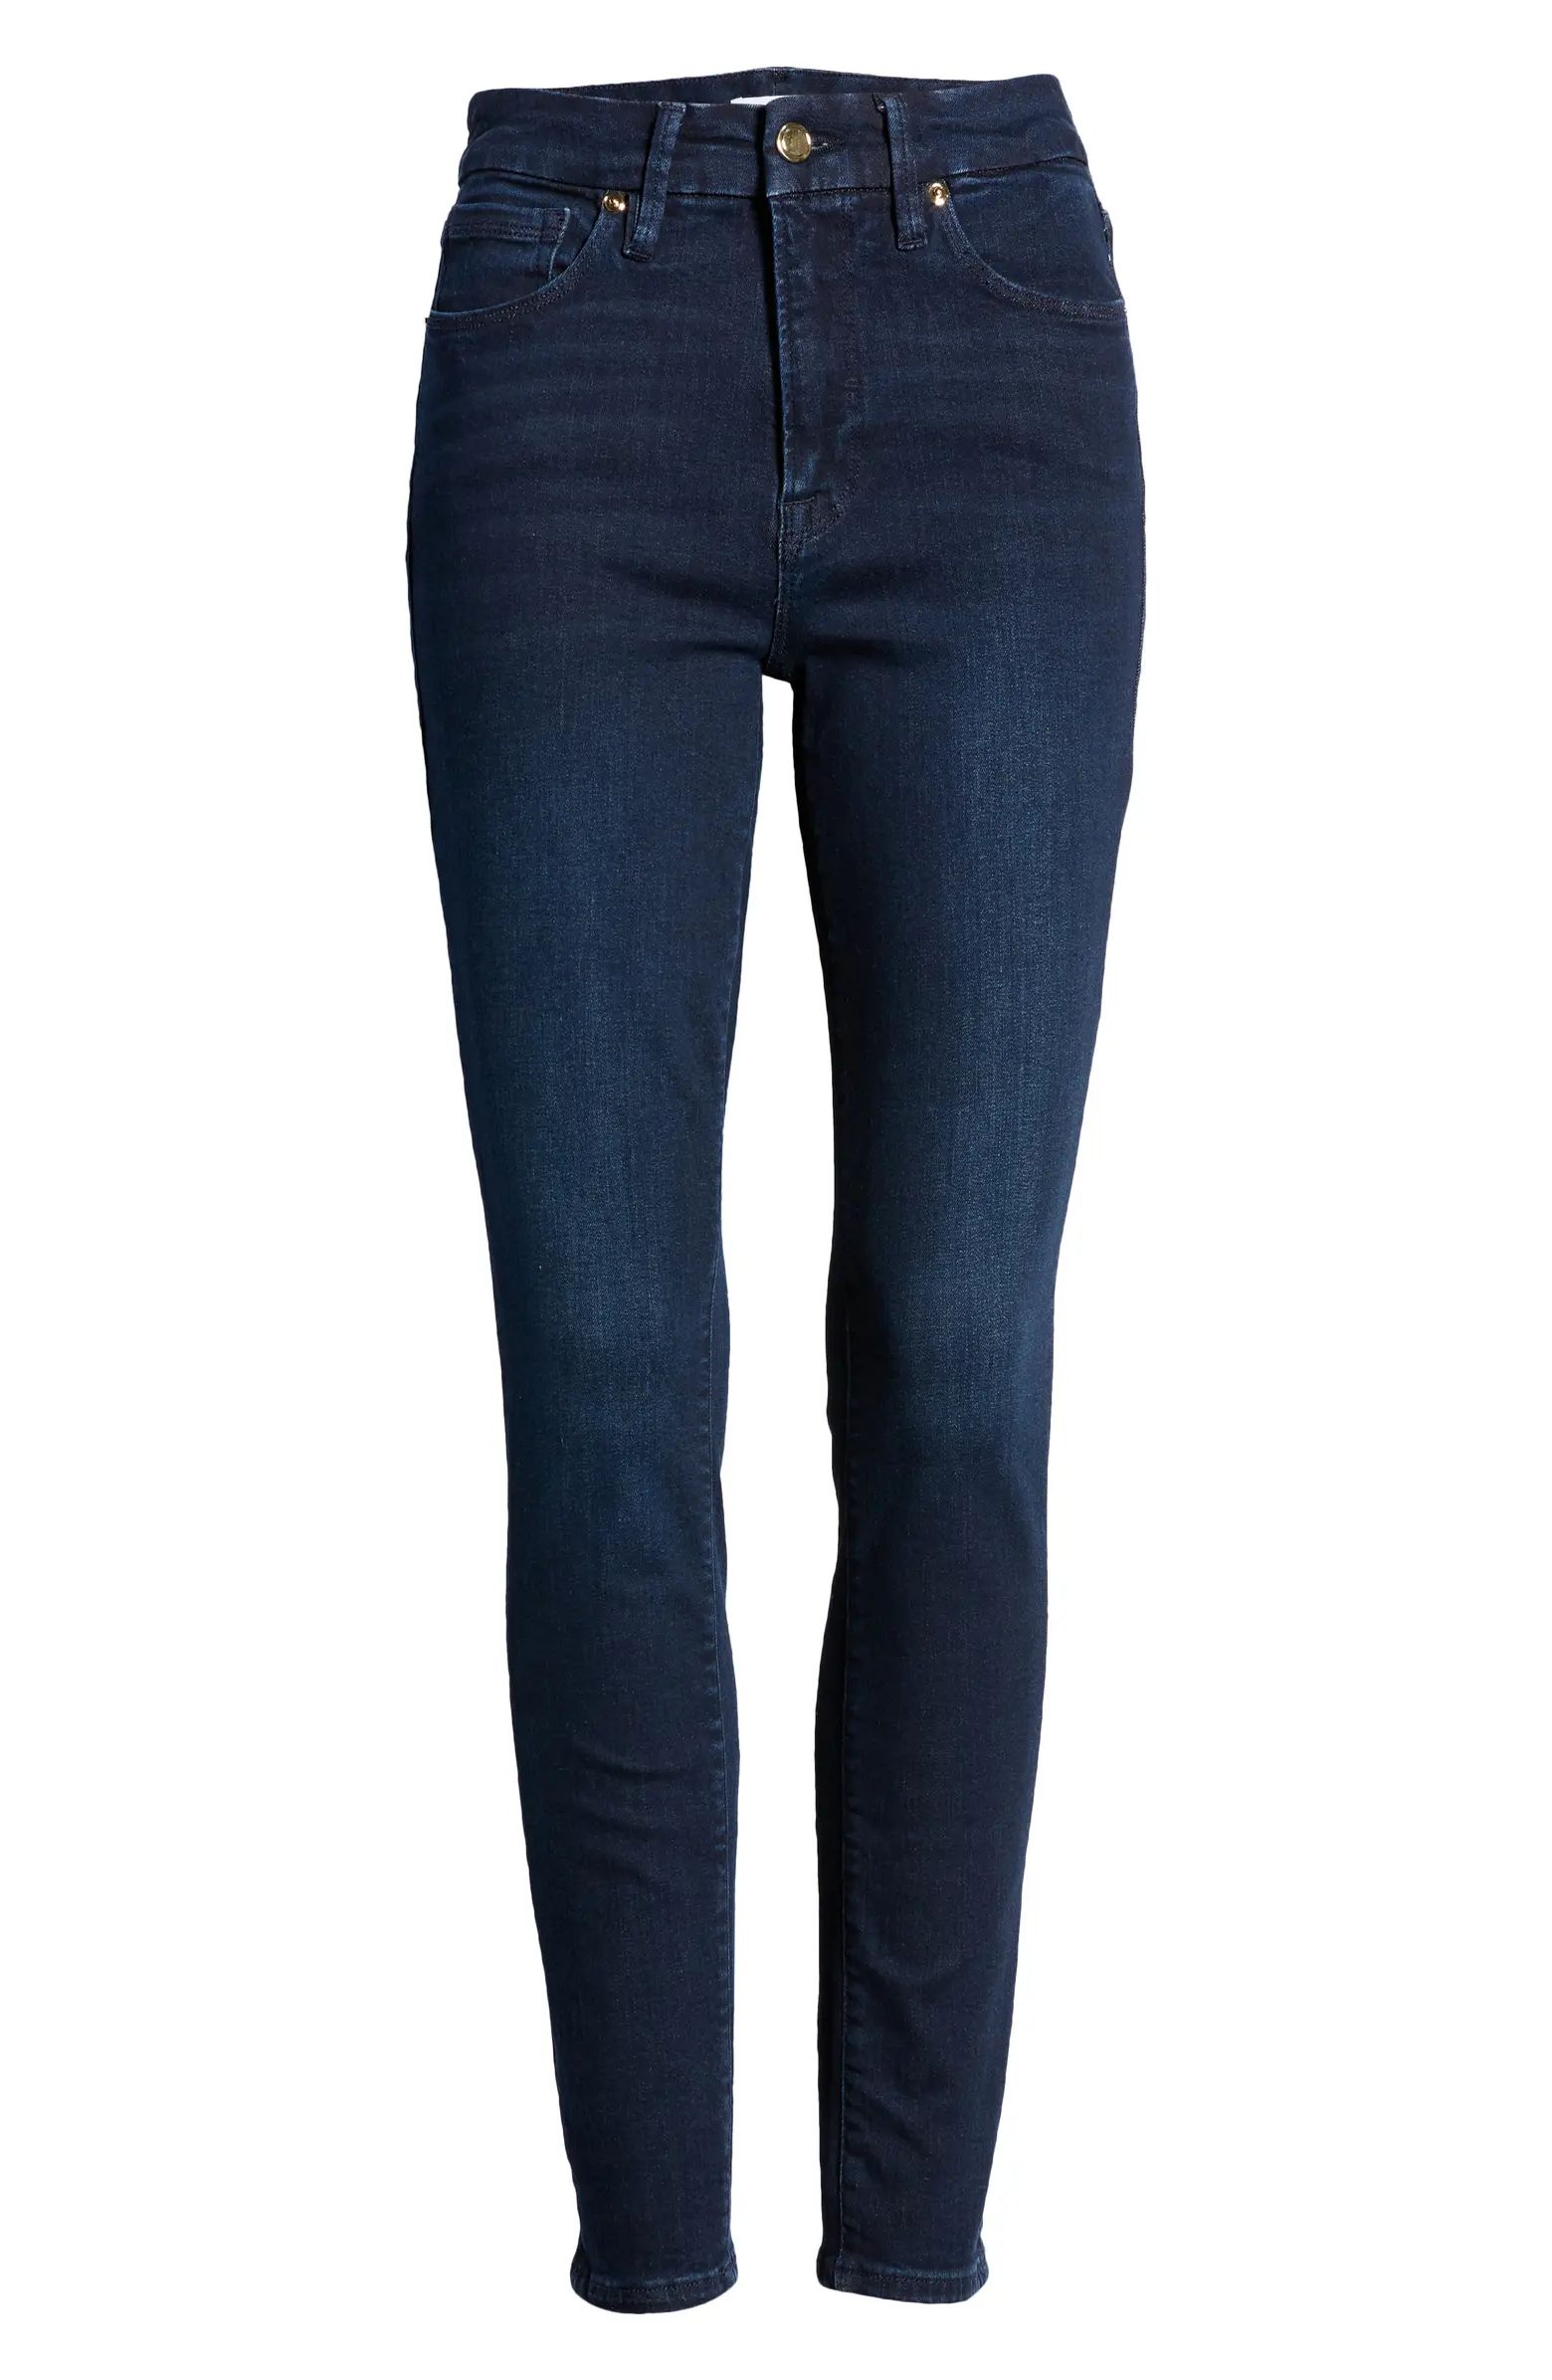 Good Legs Skinny Jeans | Nordstrom